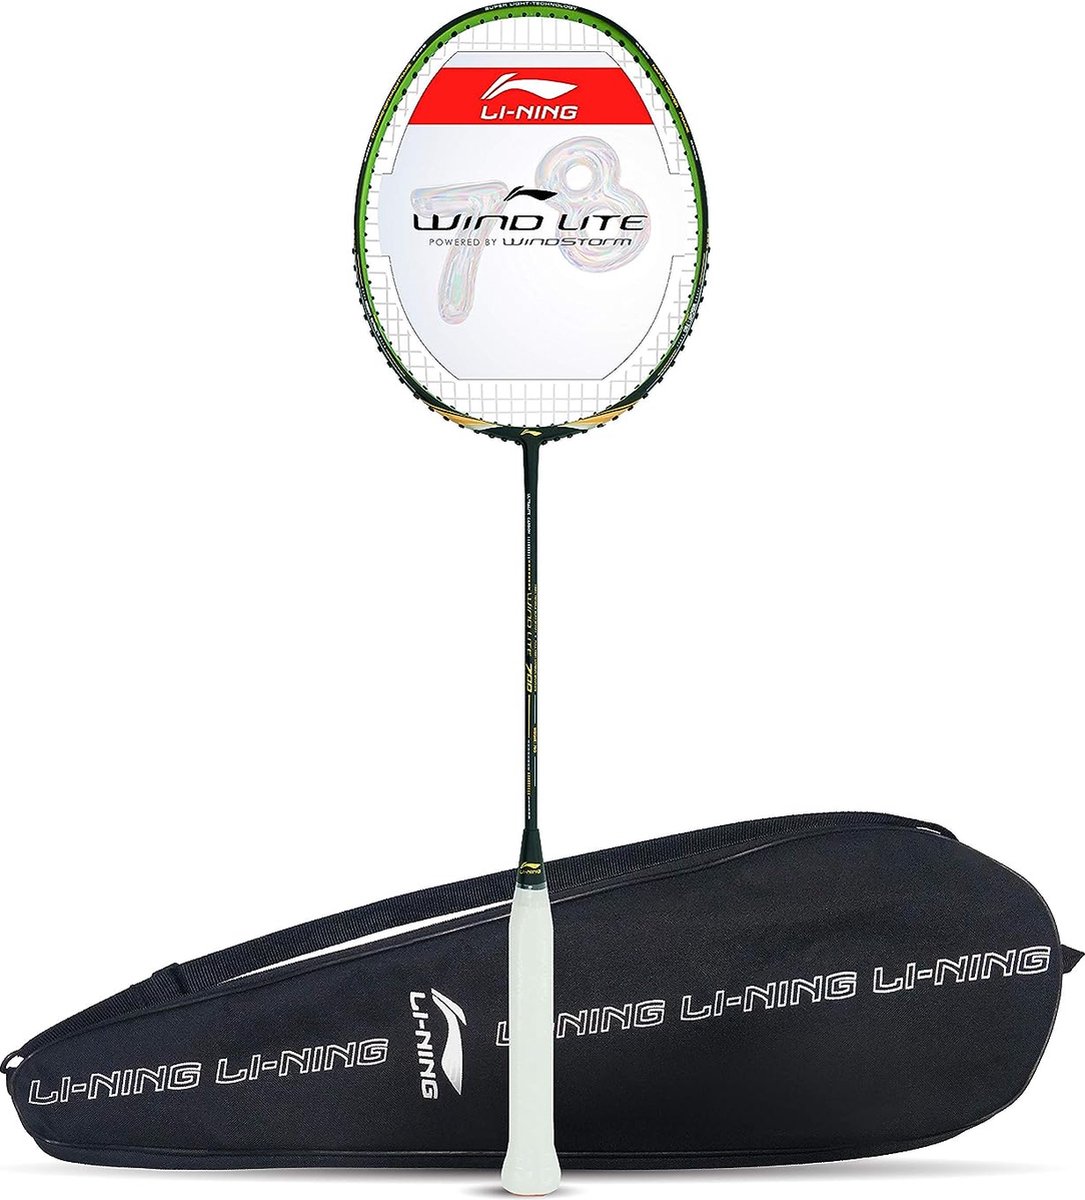 Li-Ning Wind Lite 700 Carbon Fiber Strung Badminton Racket met gratis volledige hoes (zwart/goud, set van 1)